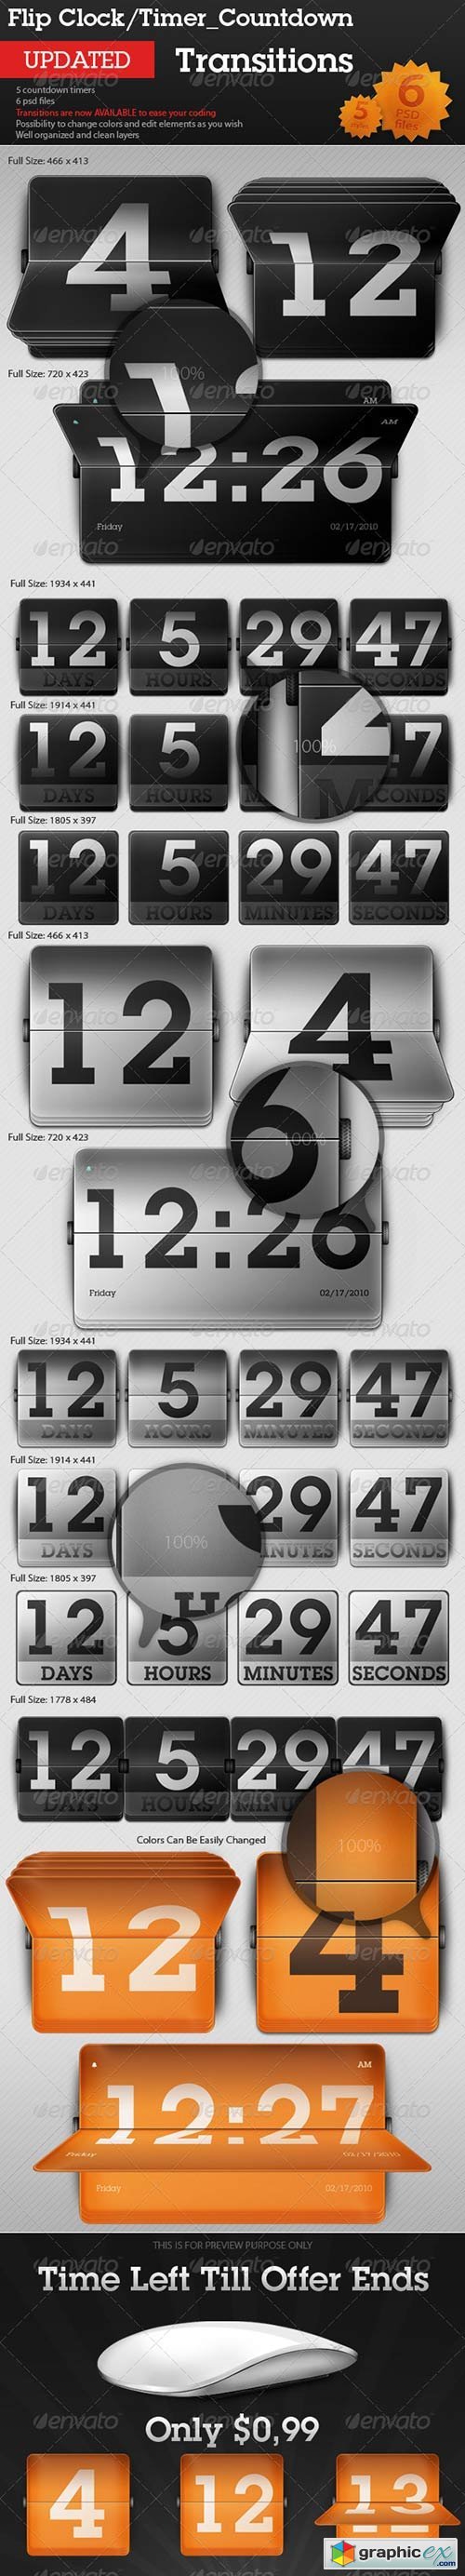 Flip Clock / Countdown Timer - Transitions